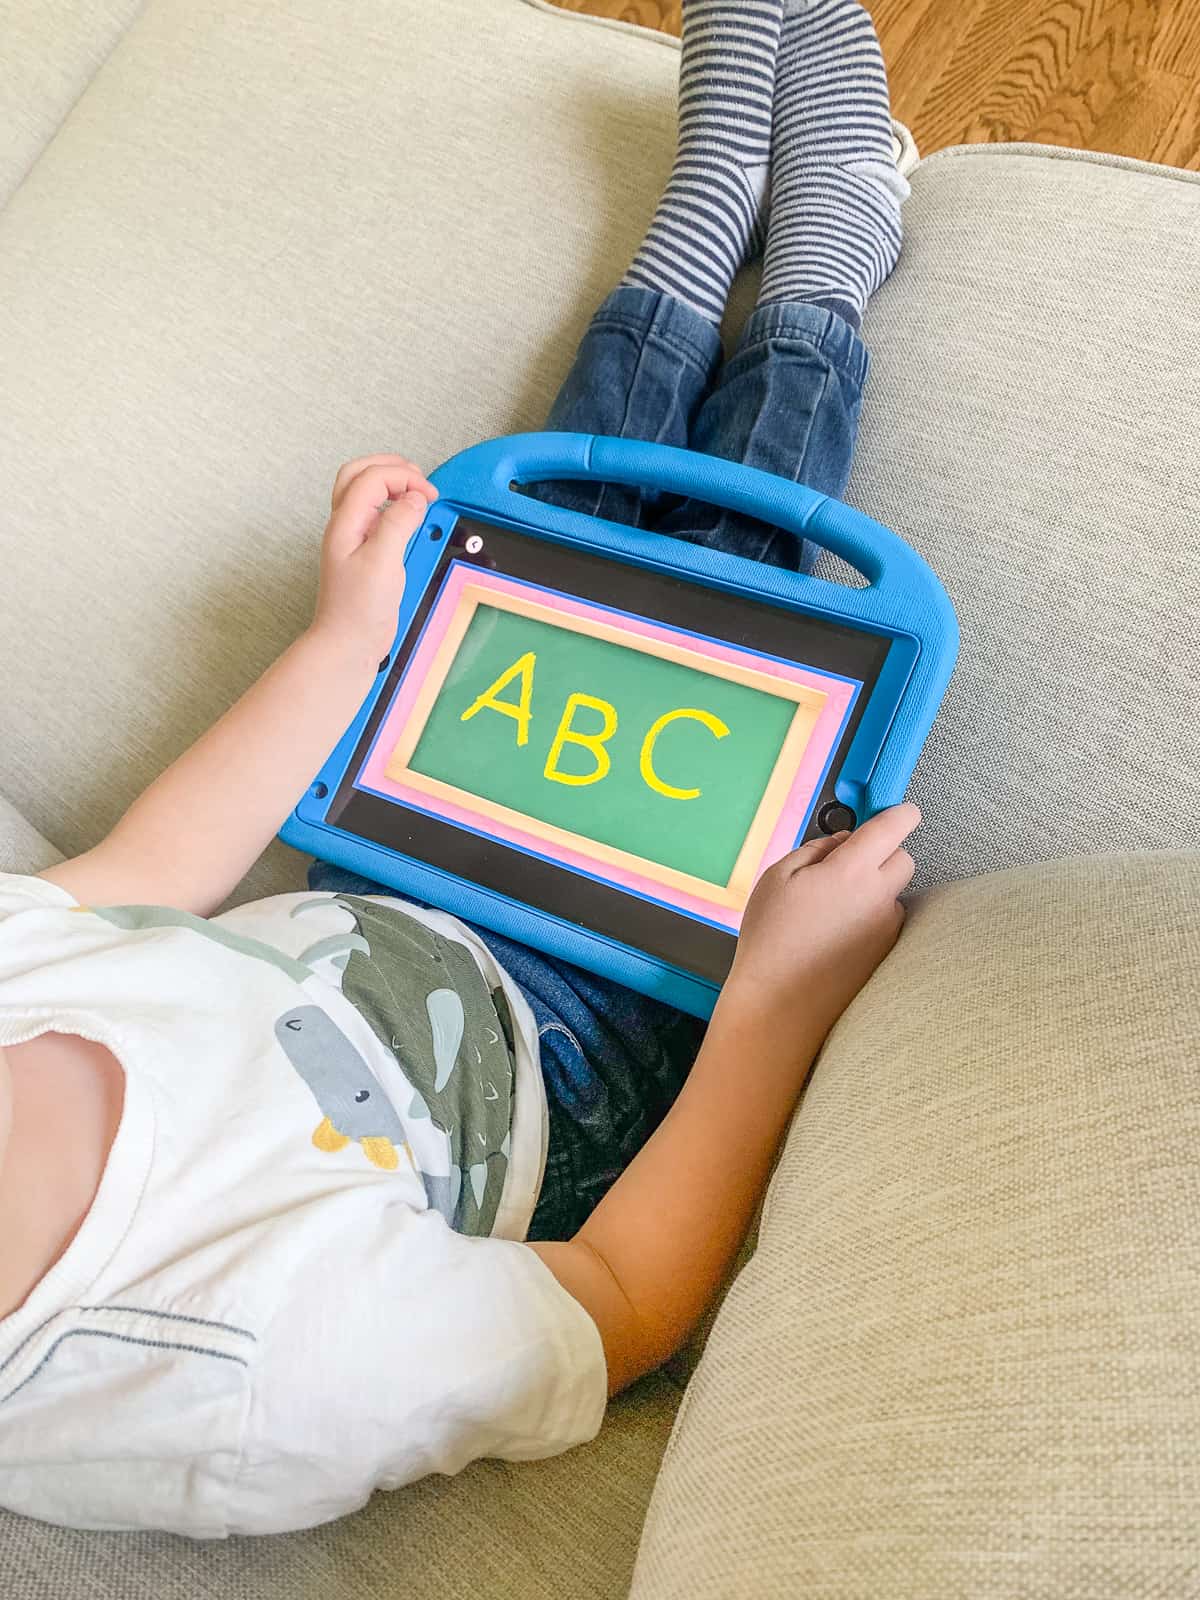 Preschool-age boy sitting and holding ipad with "A, B, C" on screen